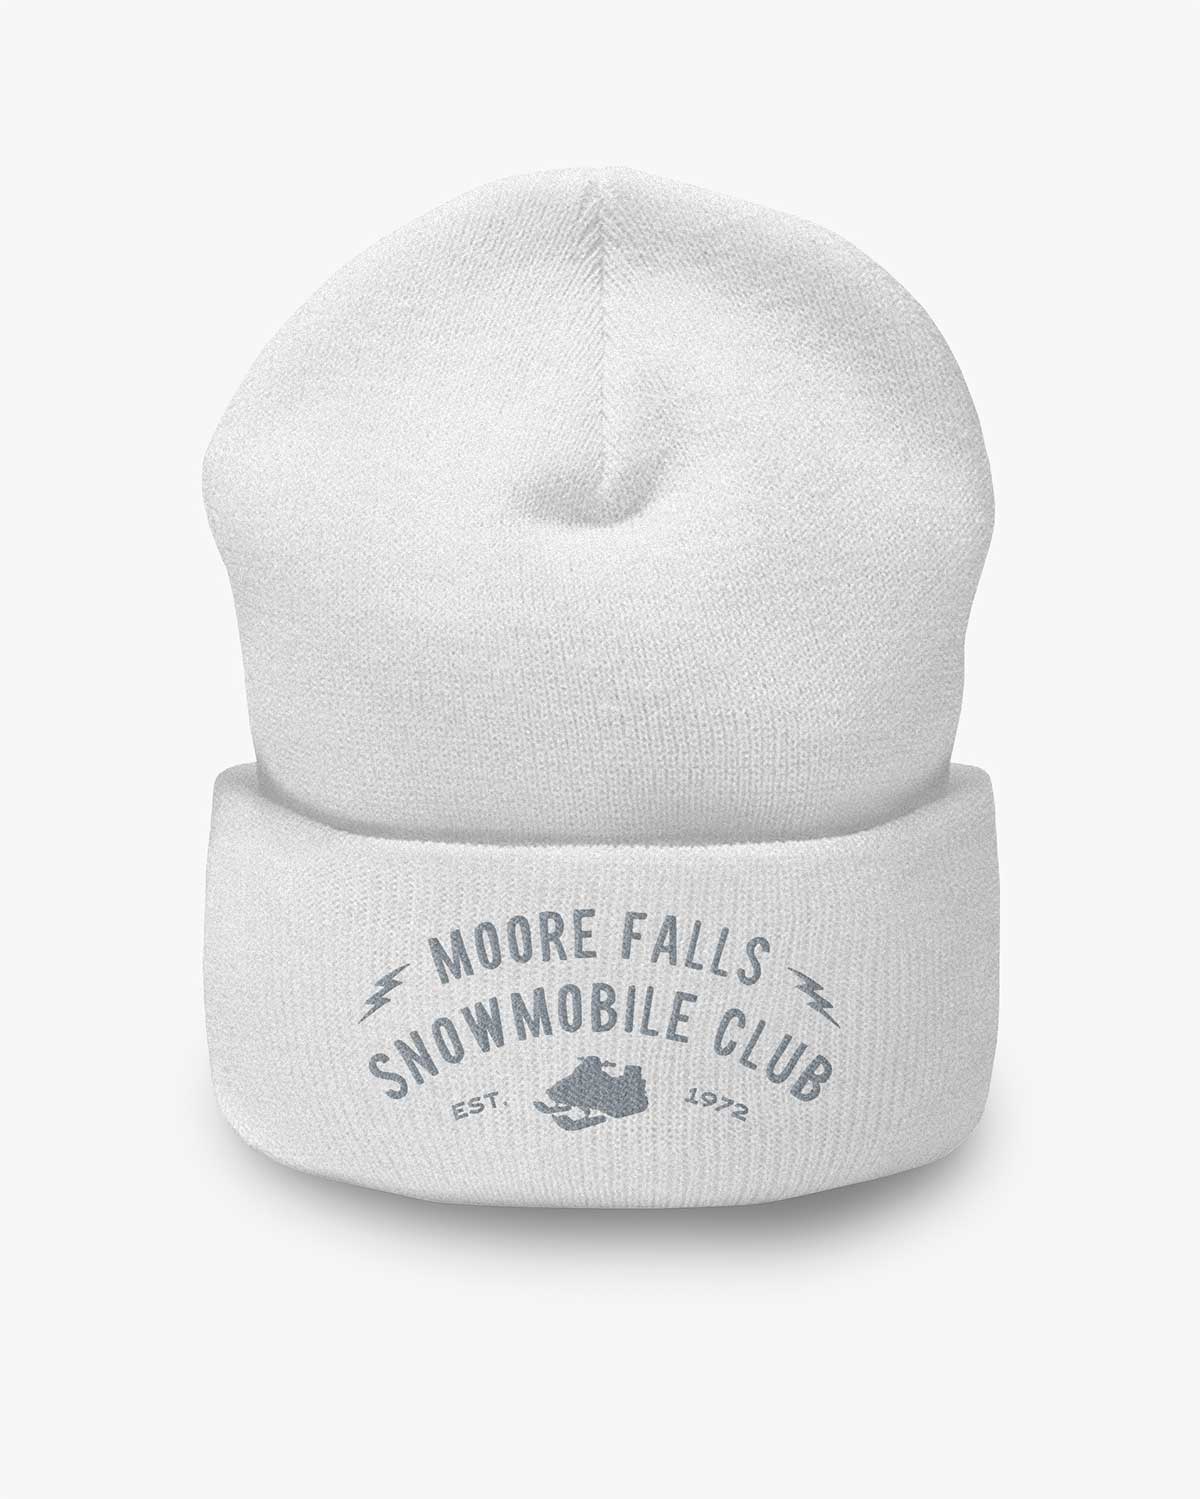 Snowmobile Club - Moore Falls - Toque